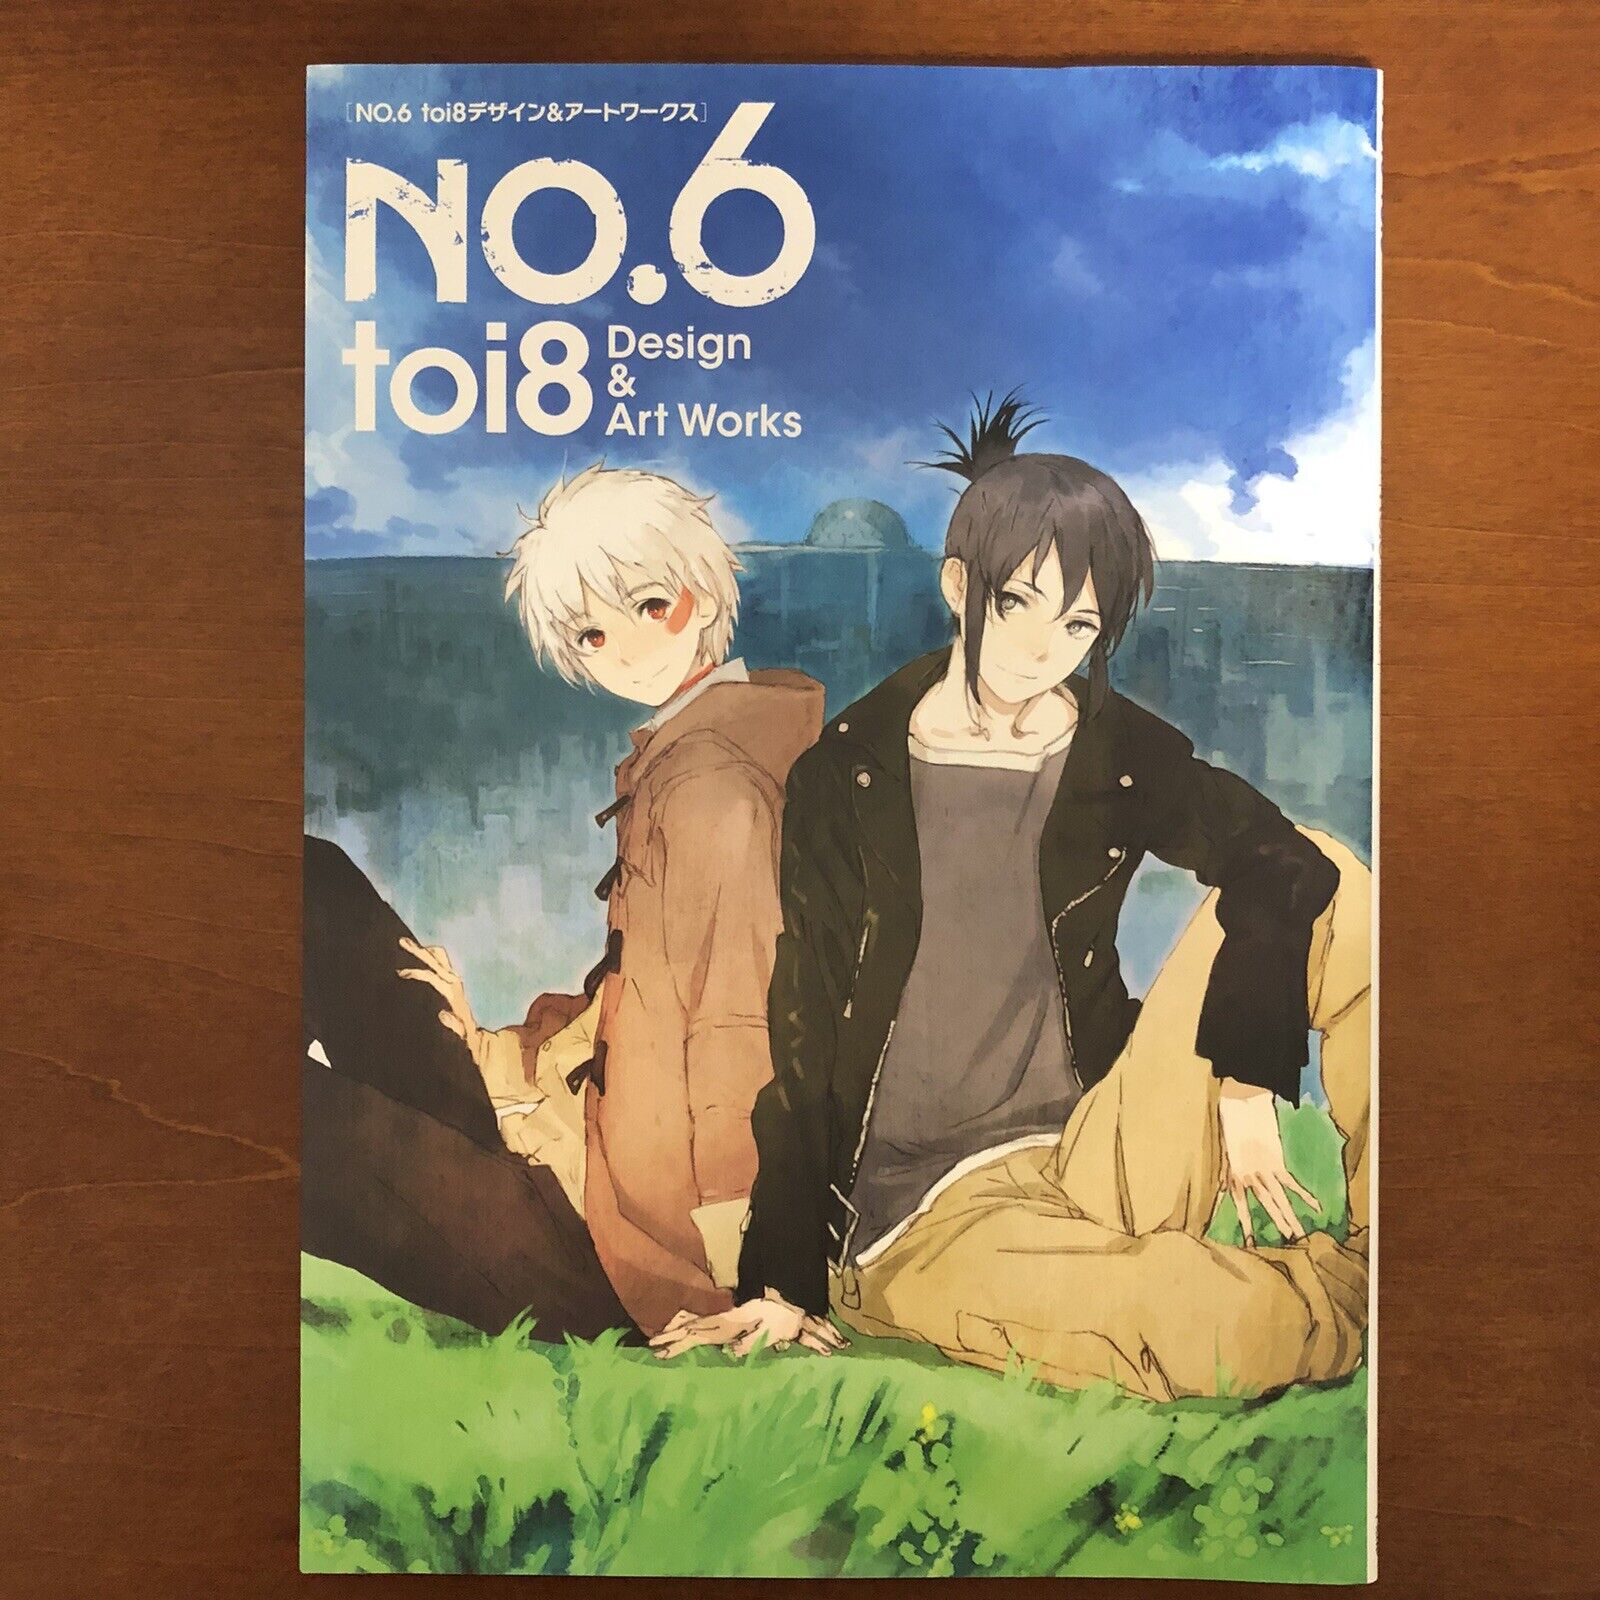 NO.6 toi8 Design and Art Works Art Book Illustration Anime Manga